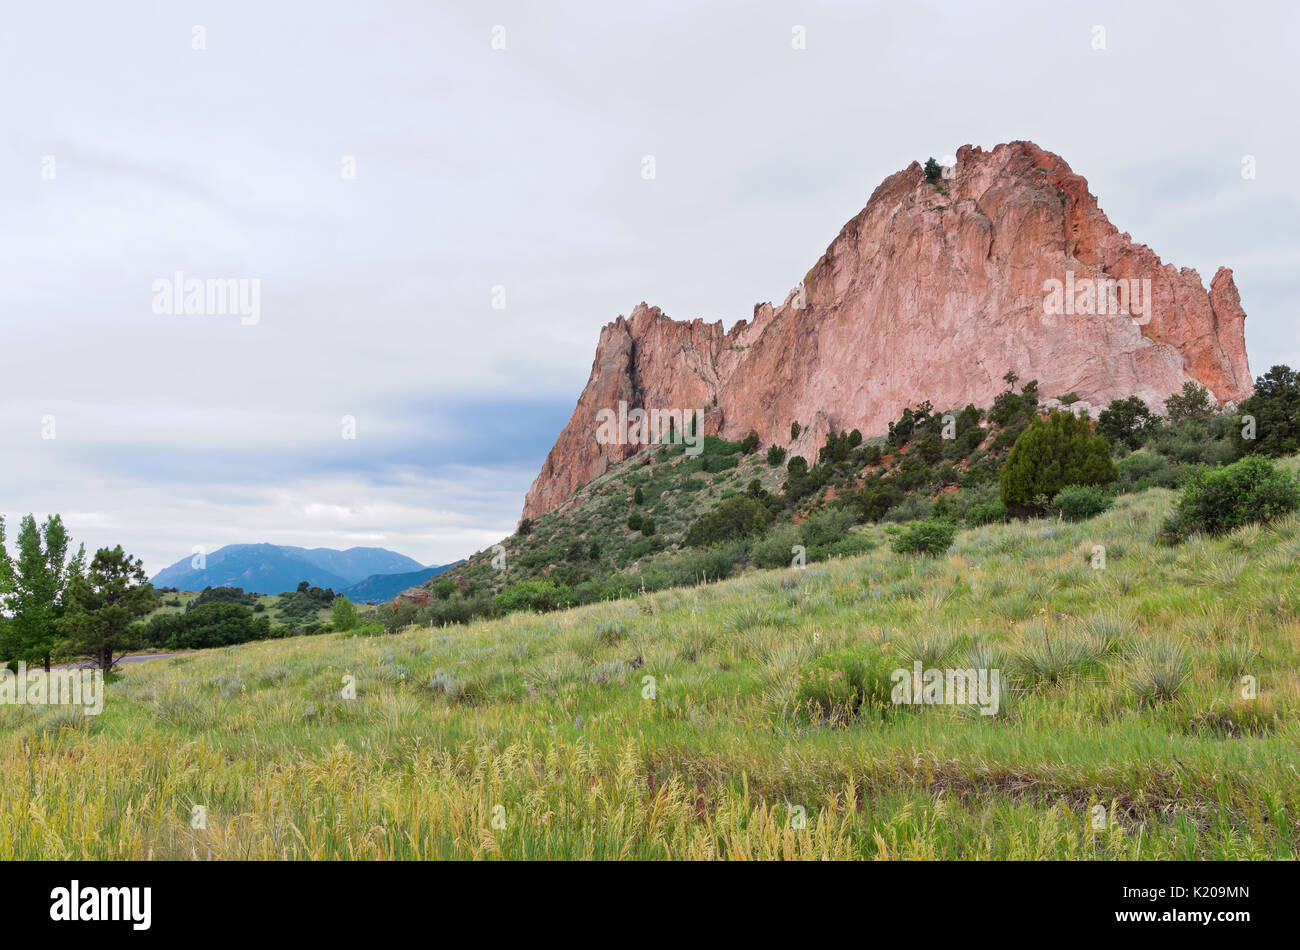 Monolith Berge und Ebenen im Garten der Götter national natural Landmark in Colorado Springs, Colorado Stockfoto